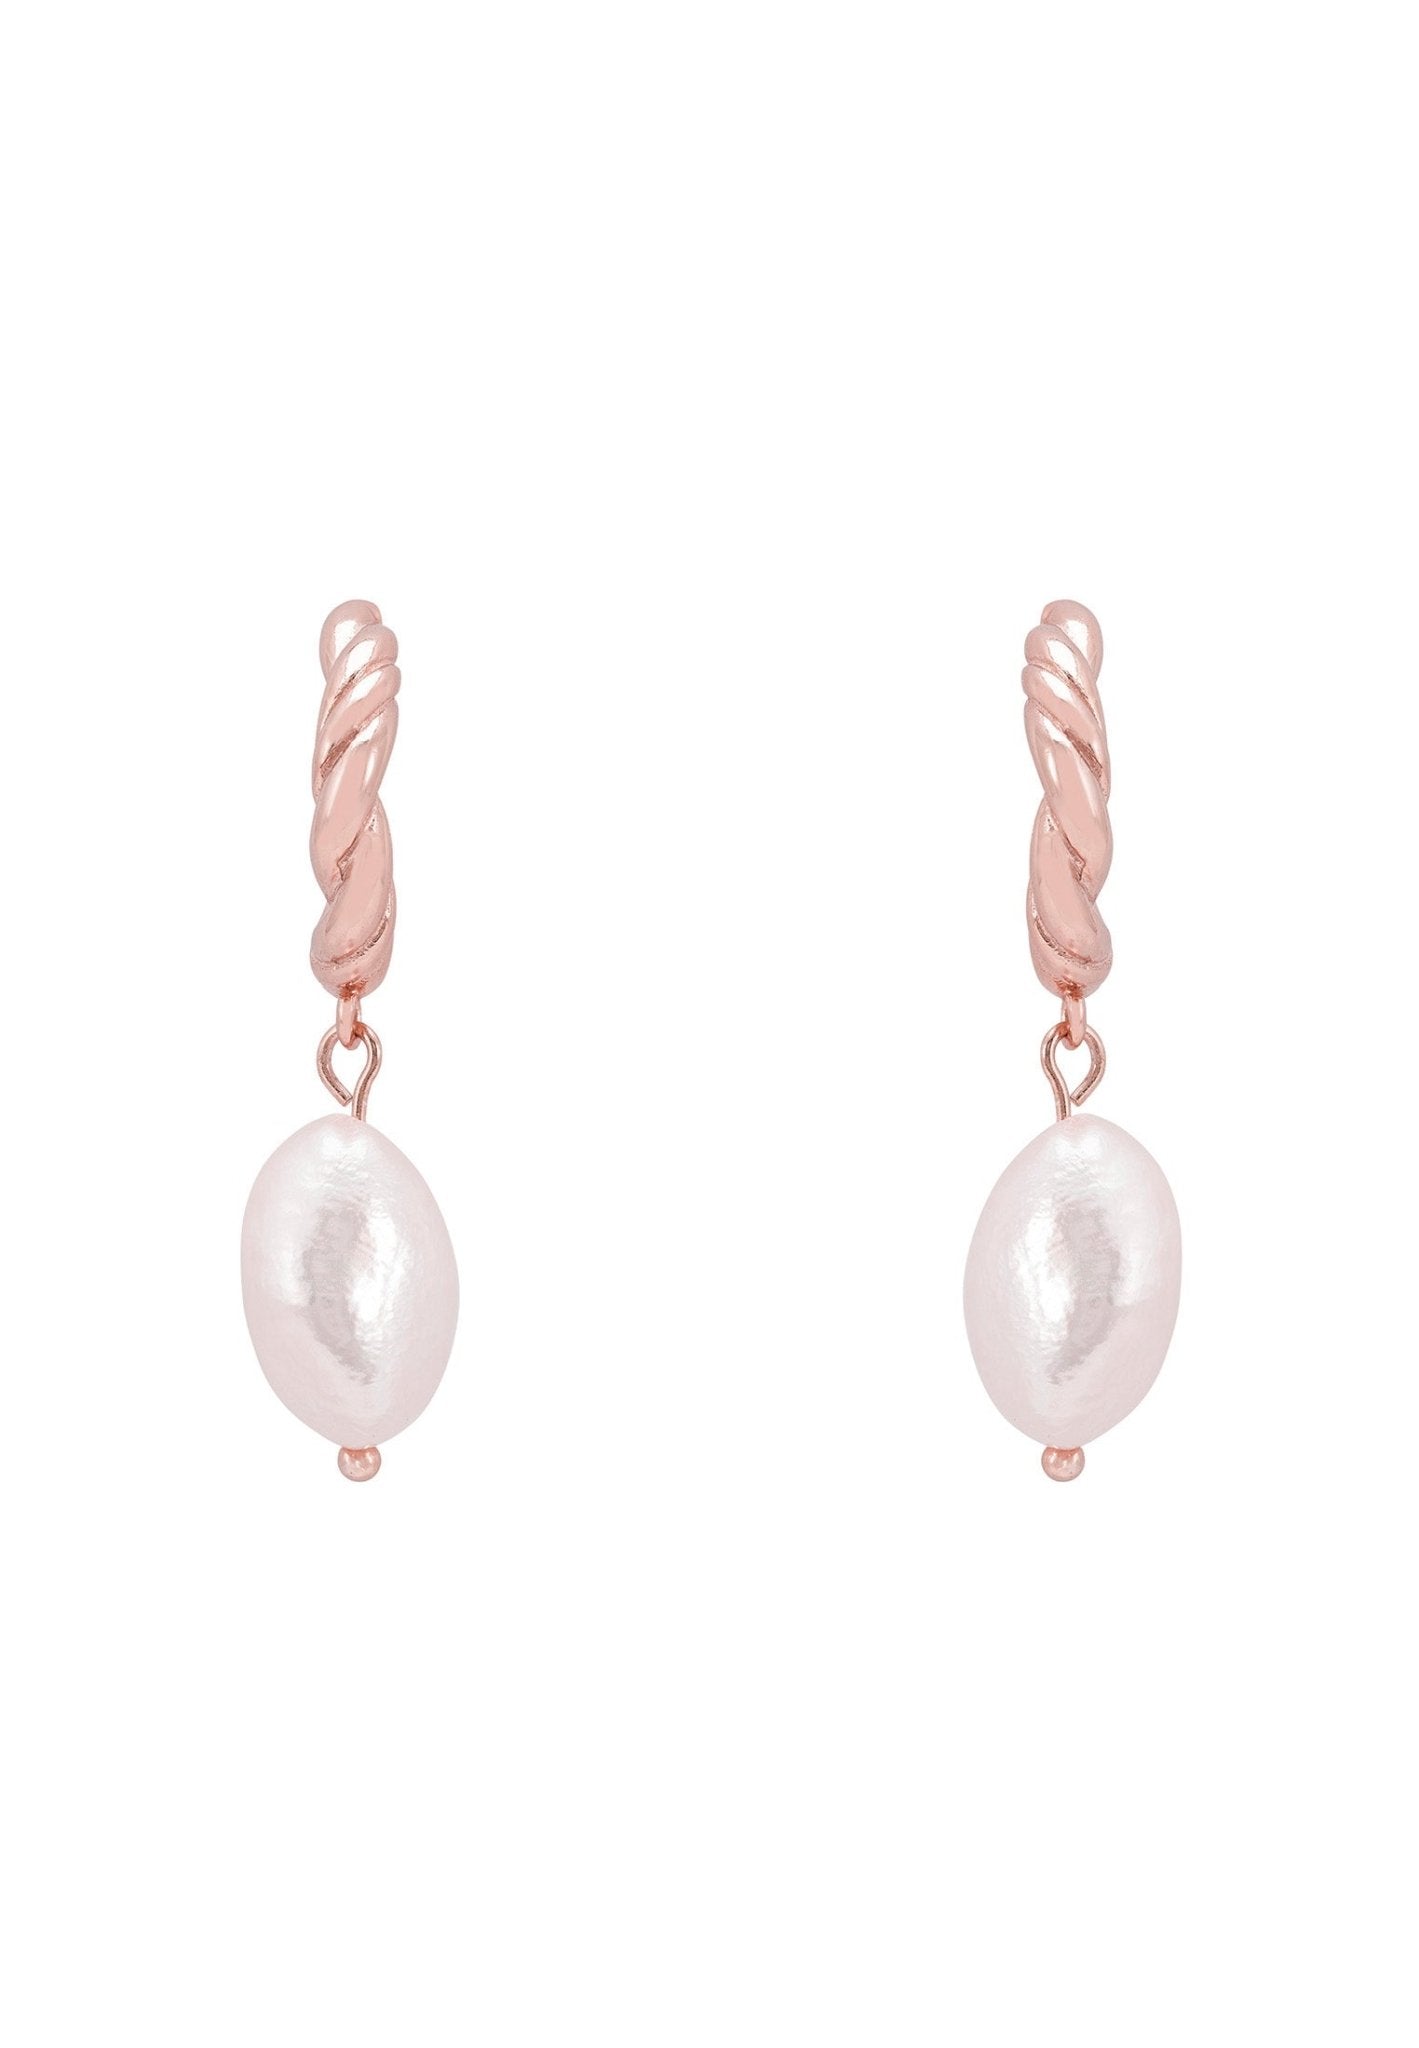 Twisted Flax Pearl Hoop Earrings Rosegold - LATELITA Earrings